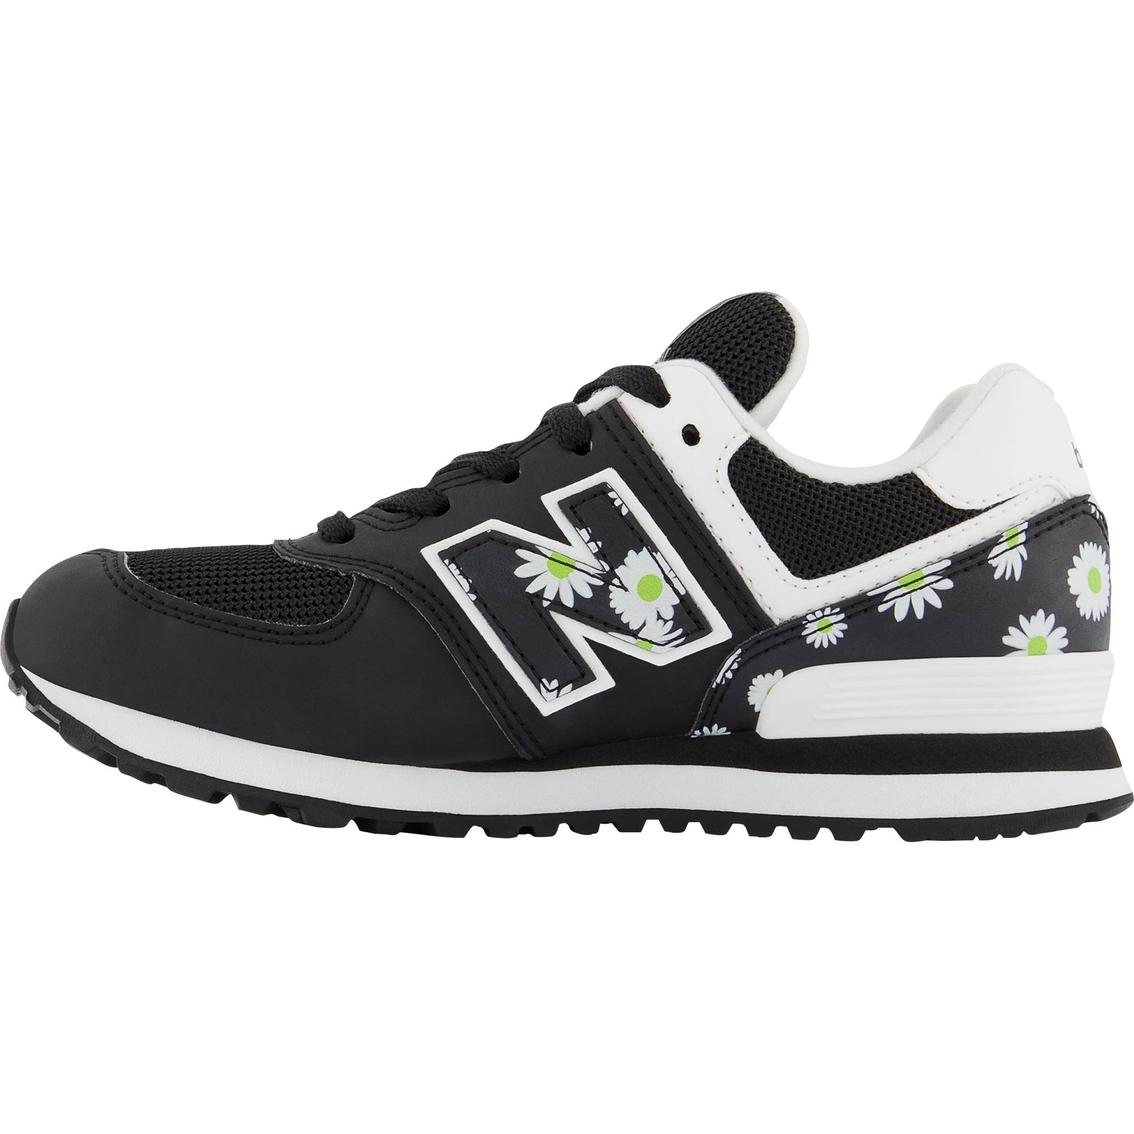 New Balance Preschool Girls 574 Running Shoes - Image 2 of 2